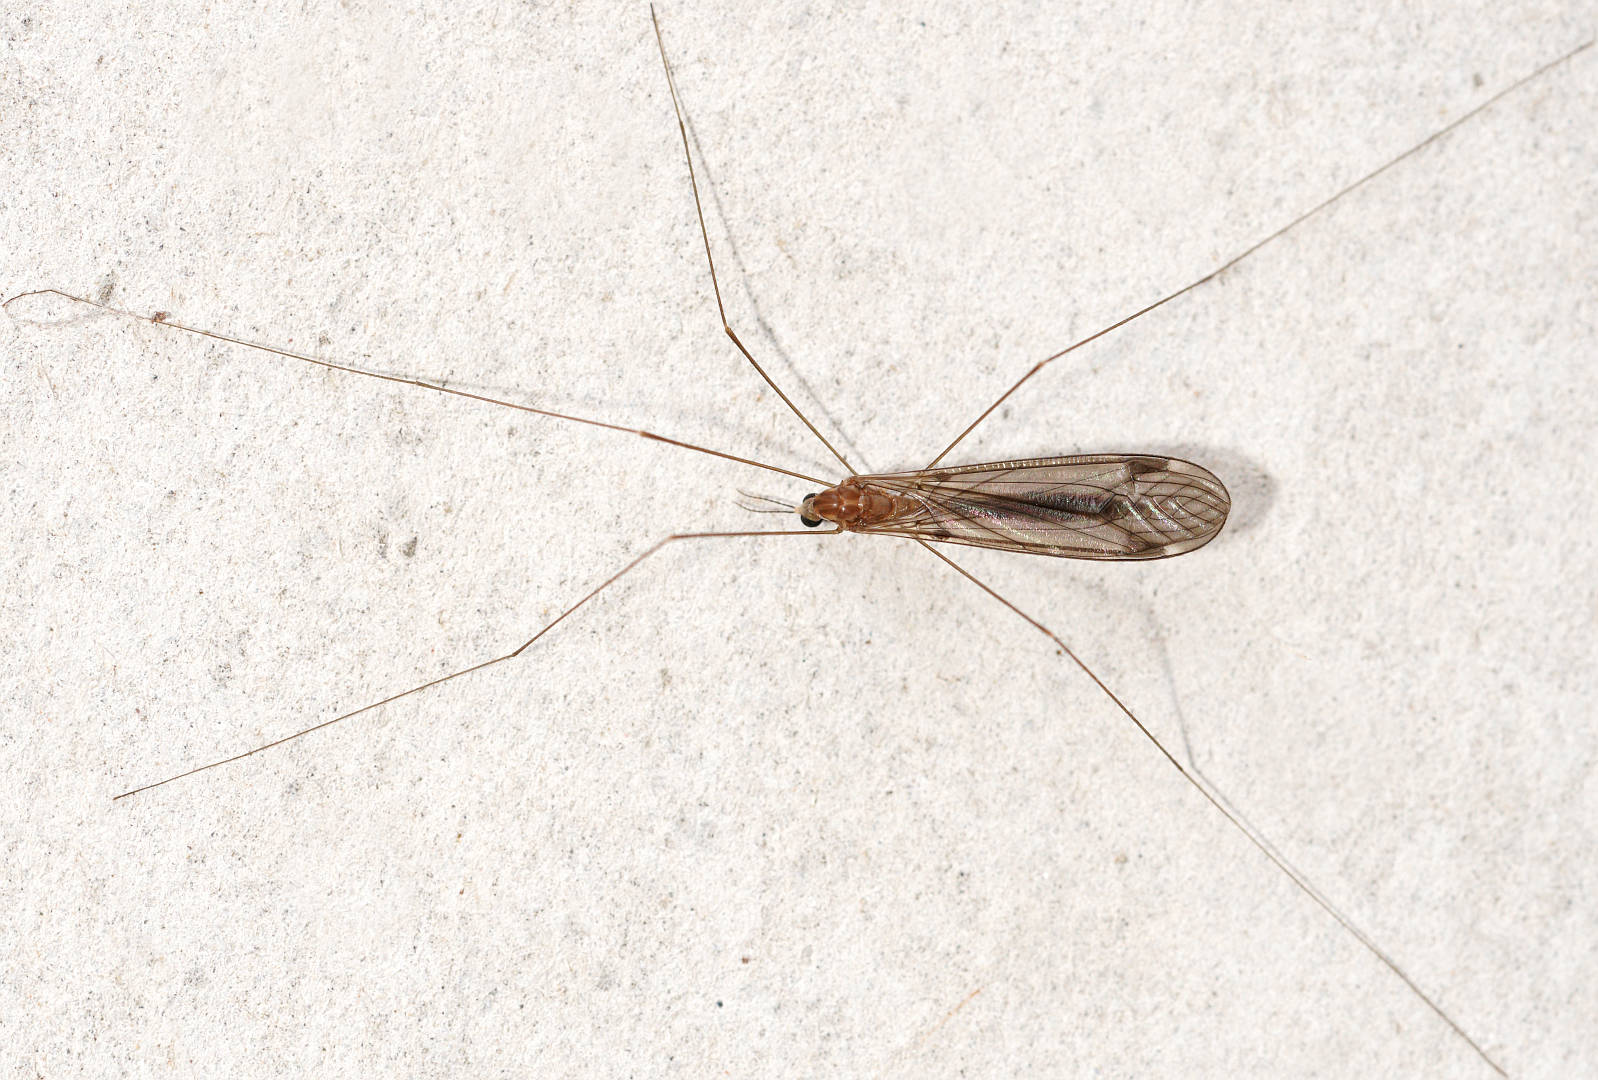 Short-palped Crane Fly (Dolichopeza sp)